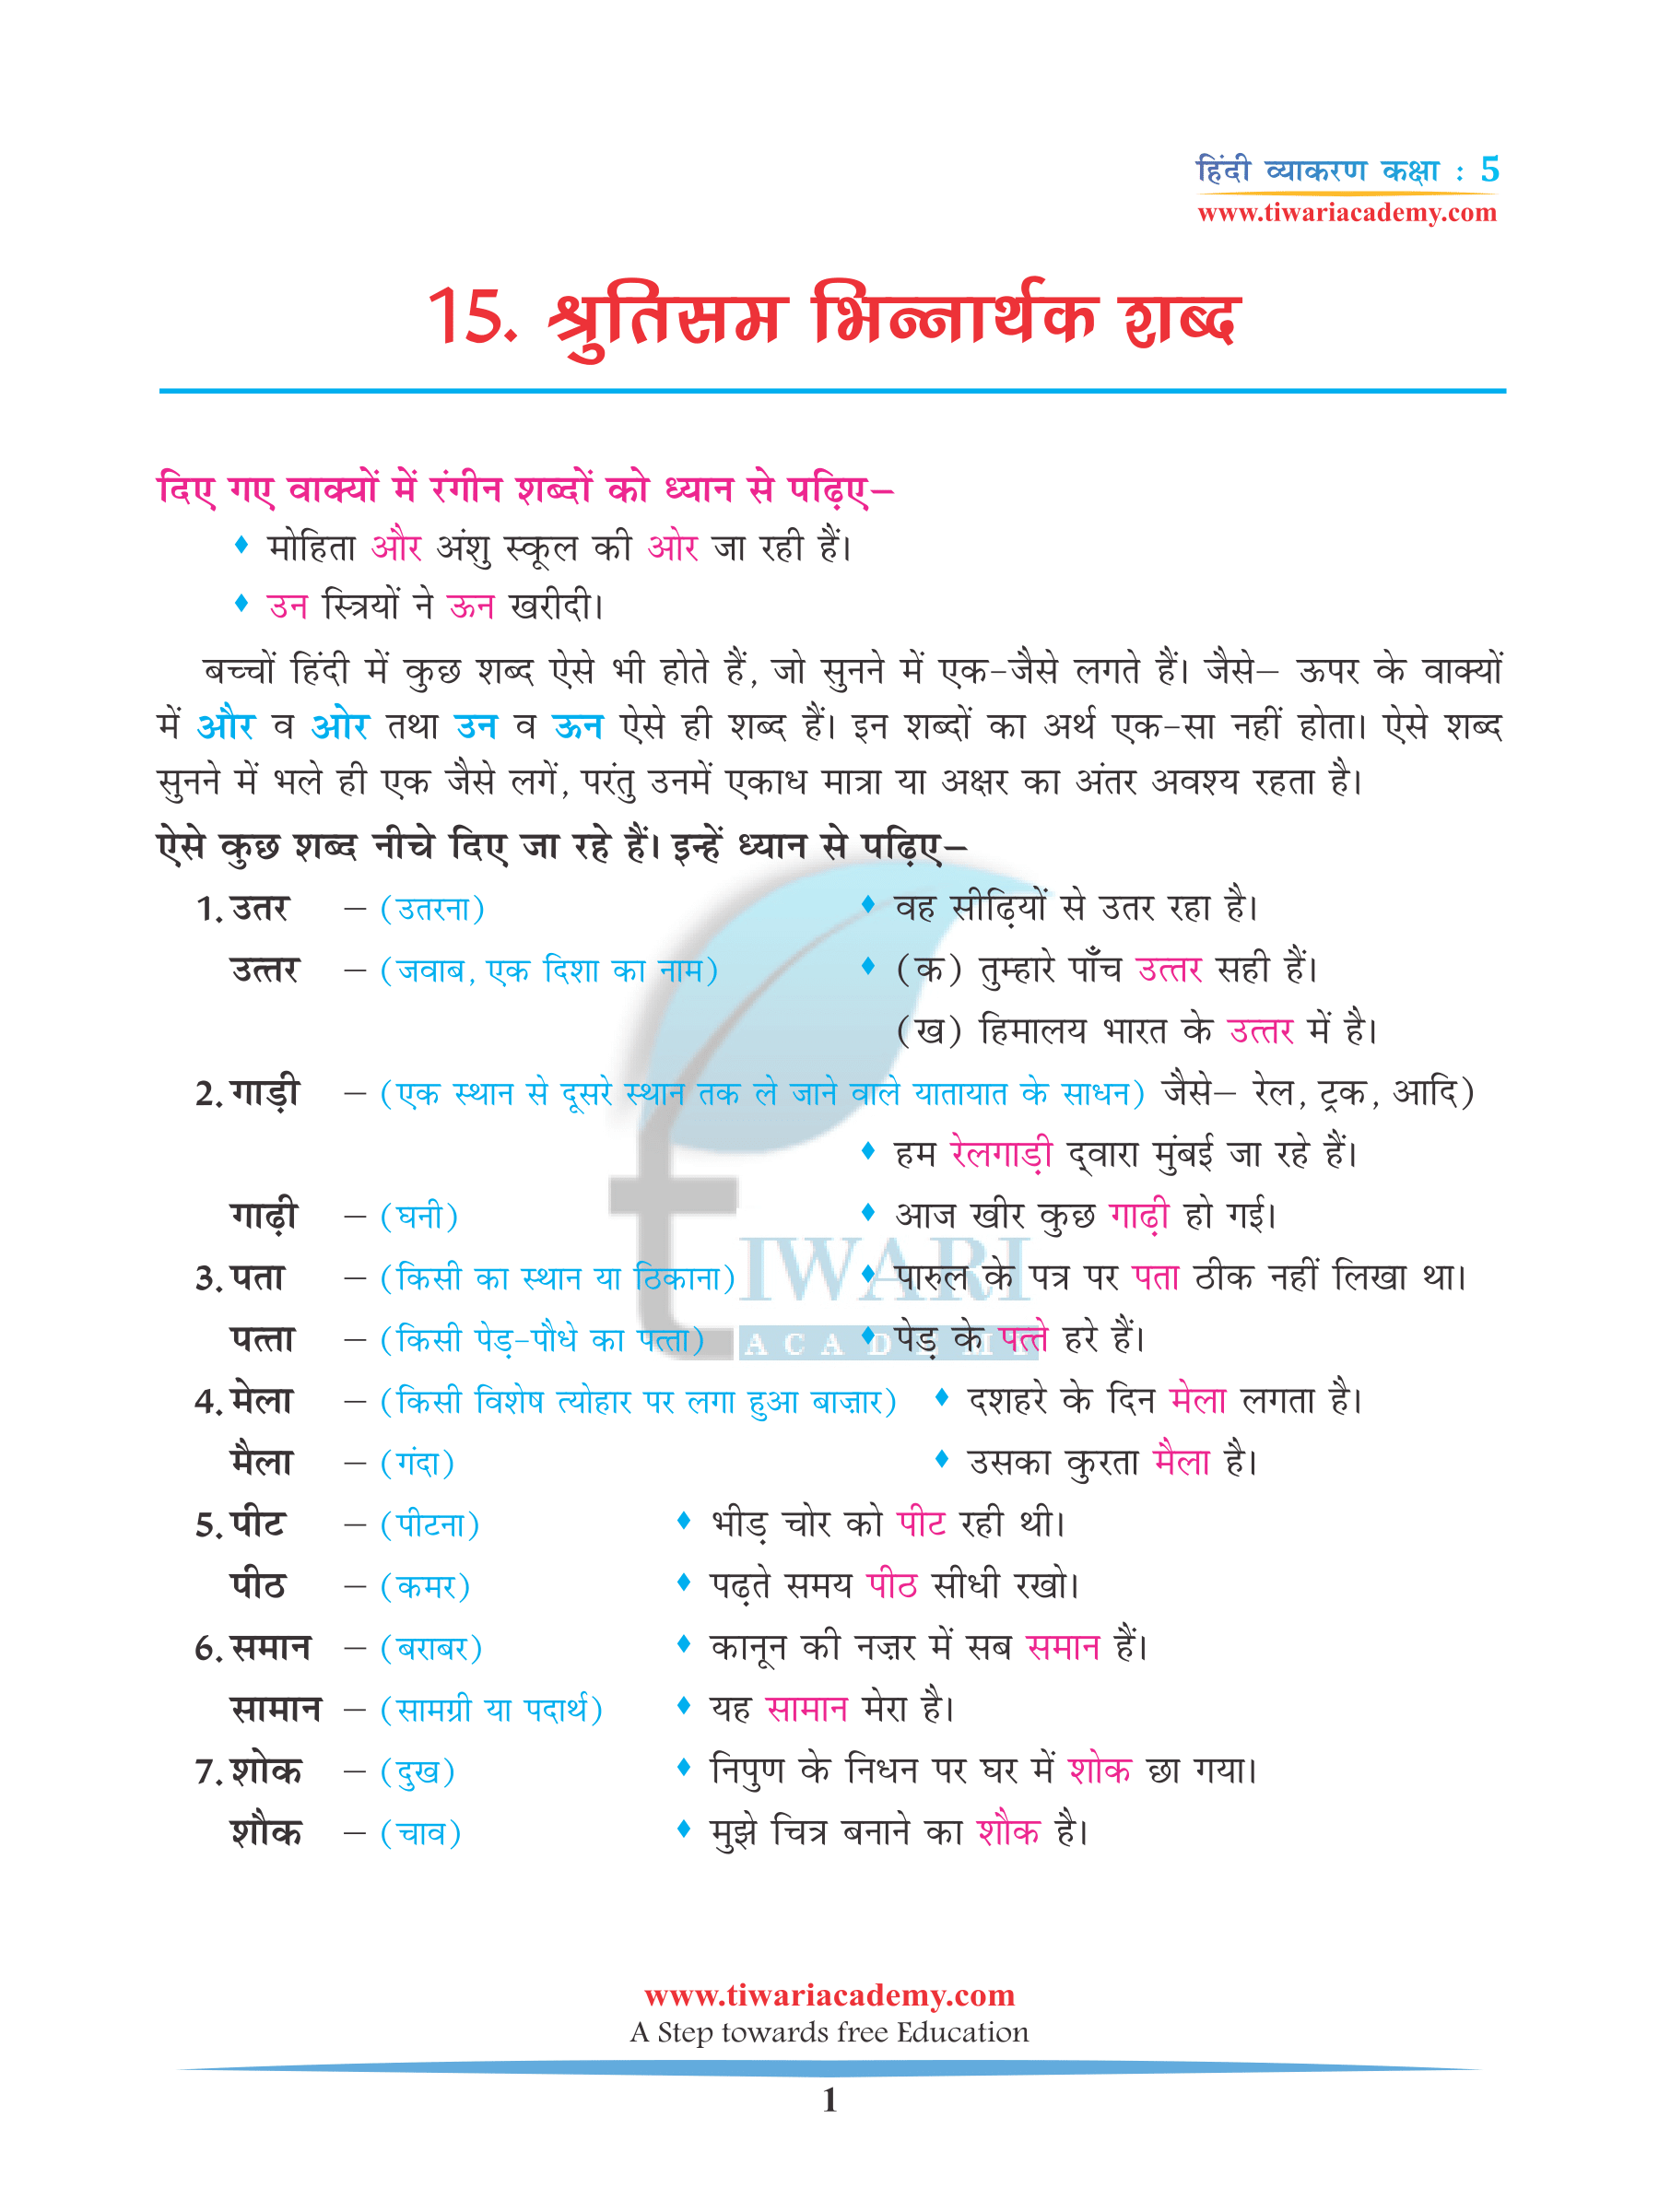 CBSE NCERT Solutions for Class 5 Hindi Grammar Chapter 15 Shrutisambhinnarthak Shabd